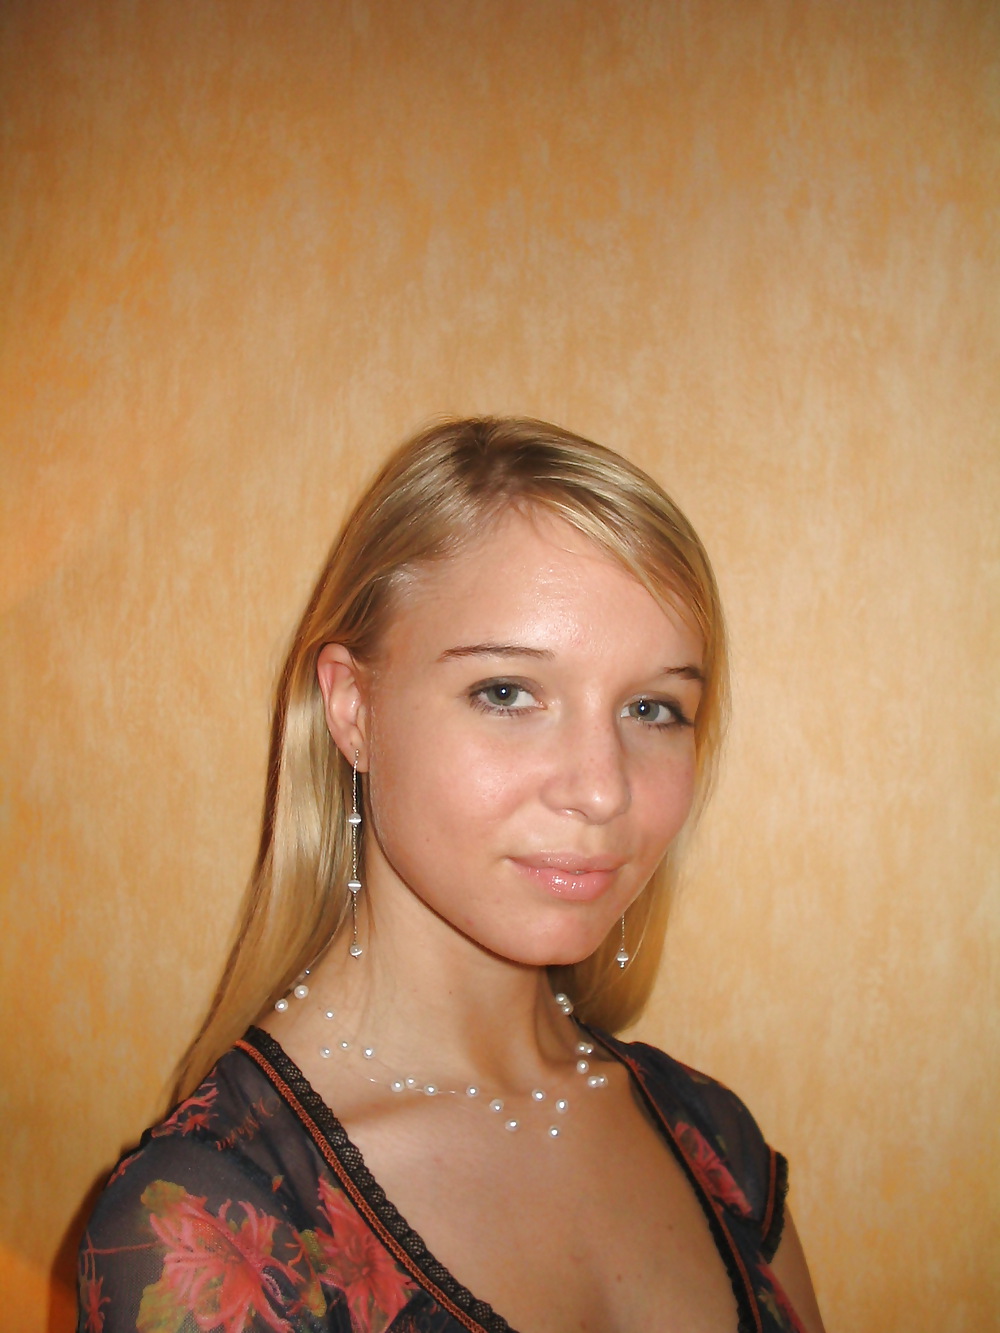 Hot ex ragazza russa teenager
 #7484992